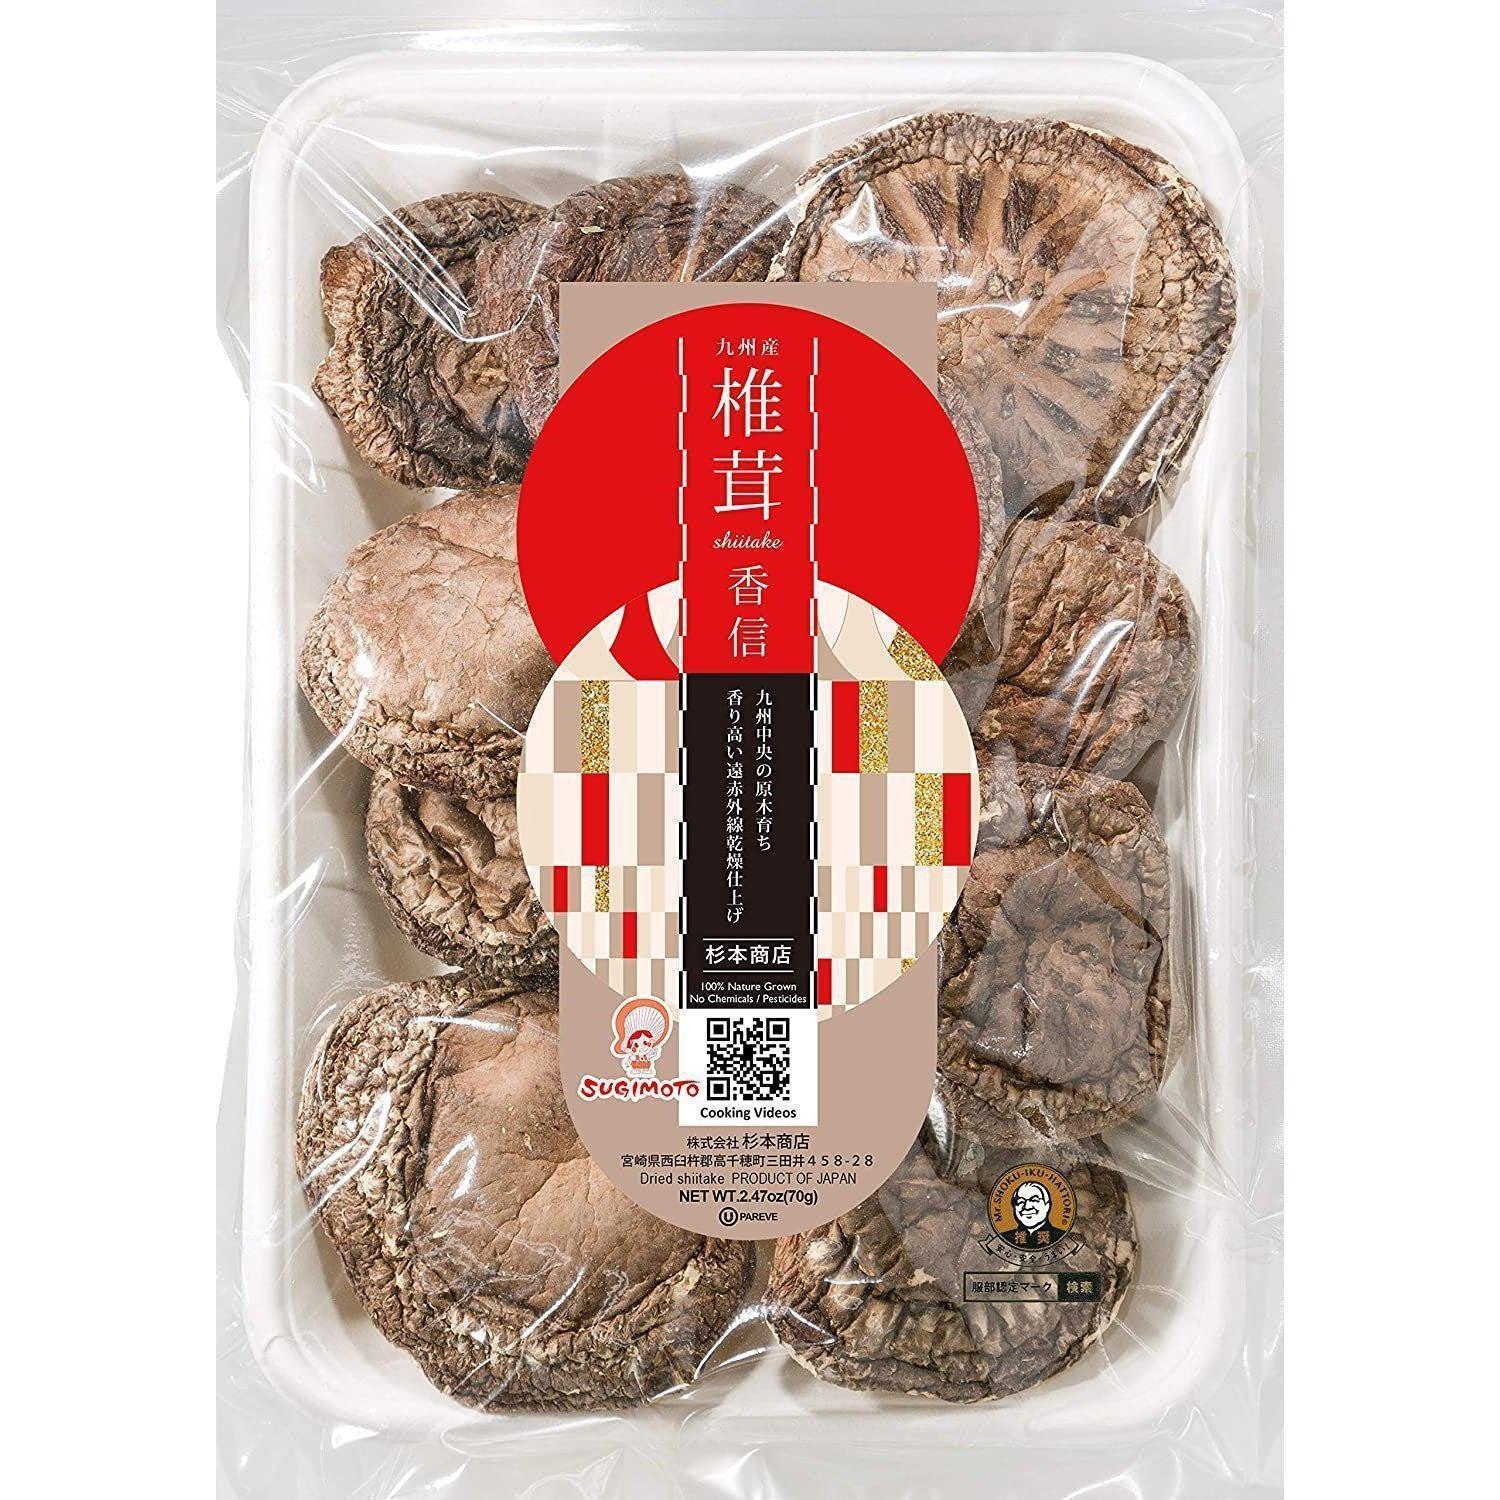 Sugimoto Dried Organic Japanese Shiitake Mushrooms 70g